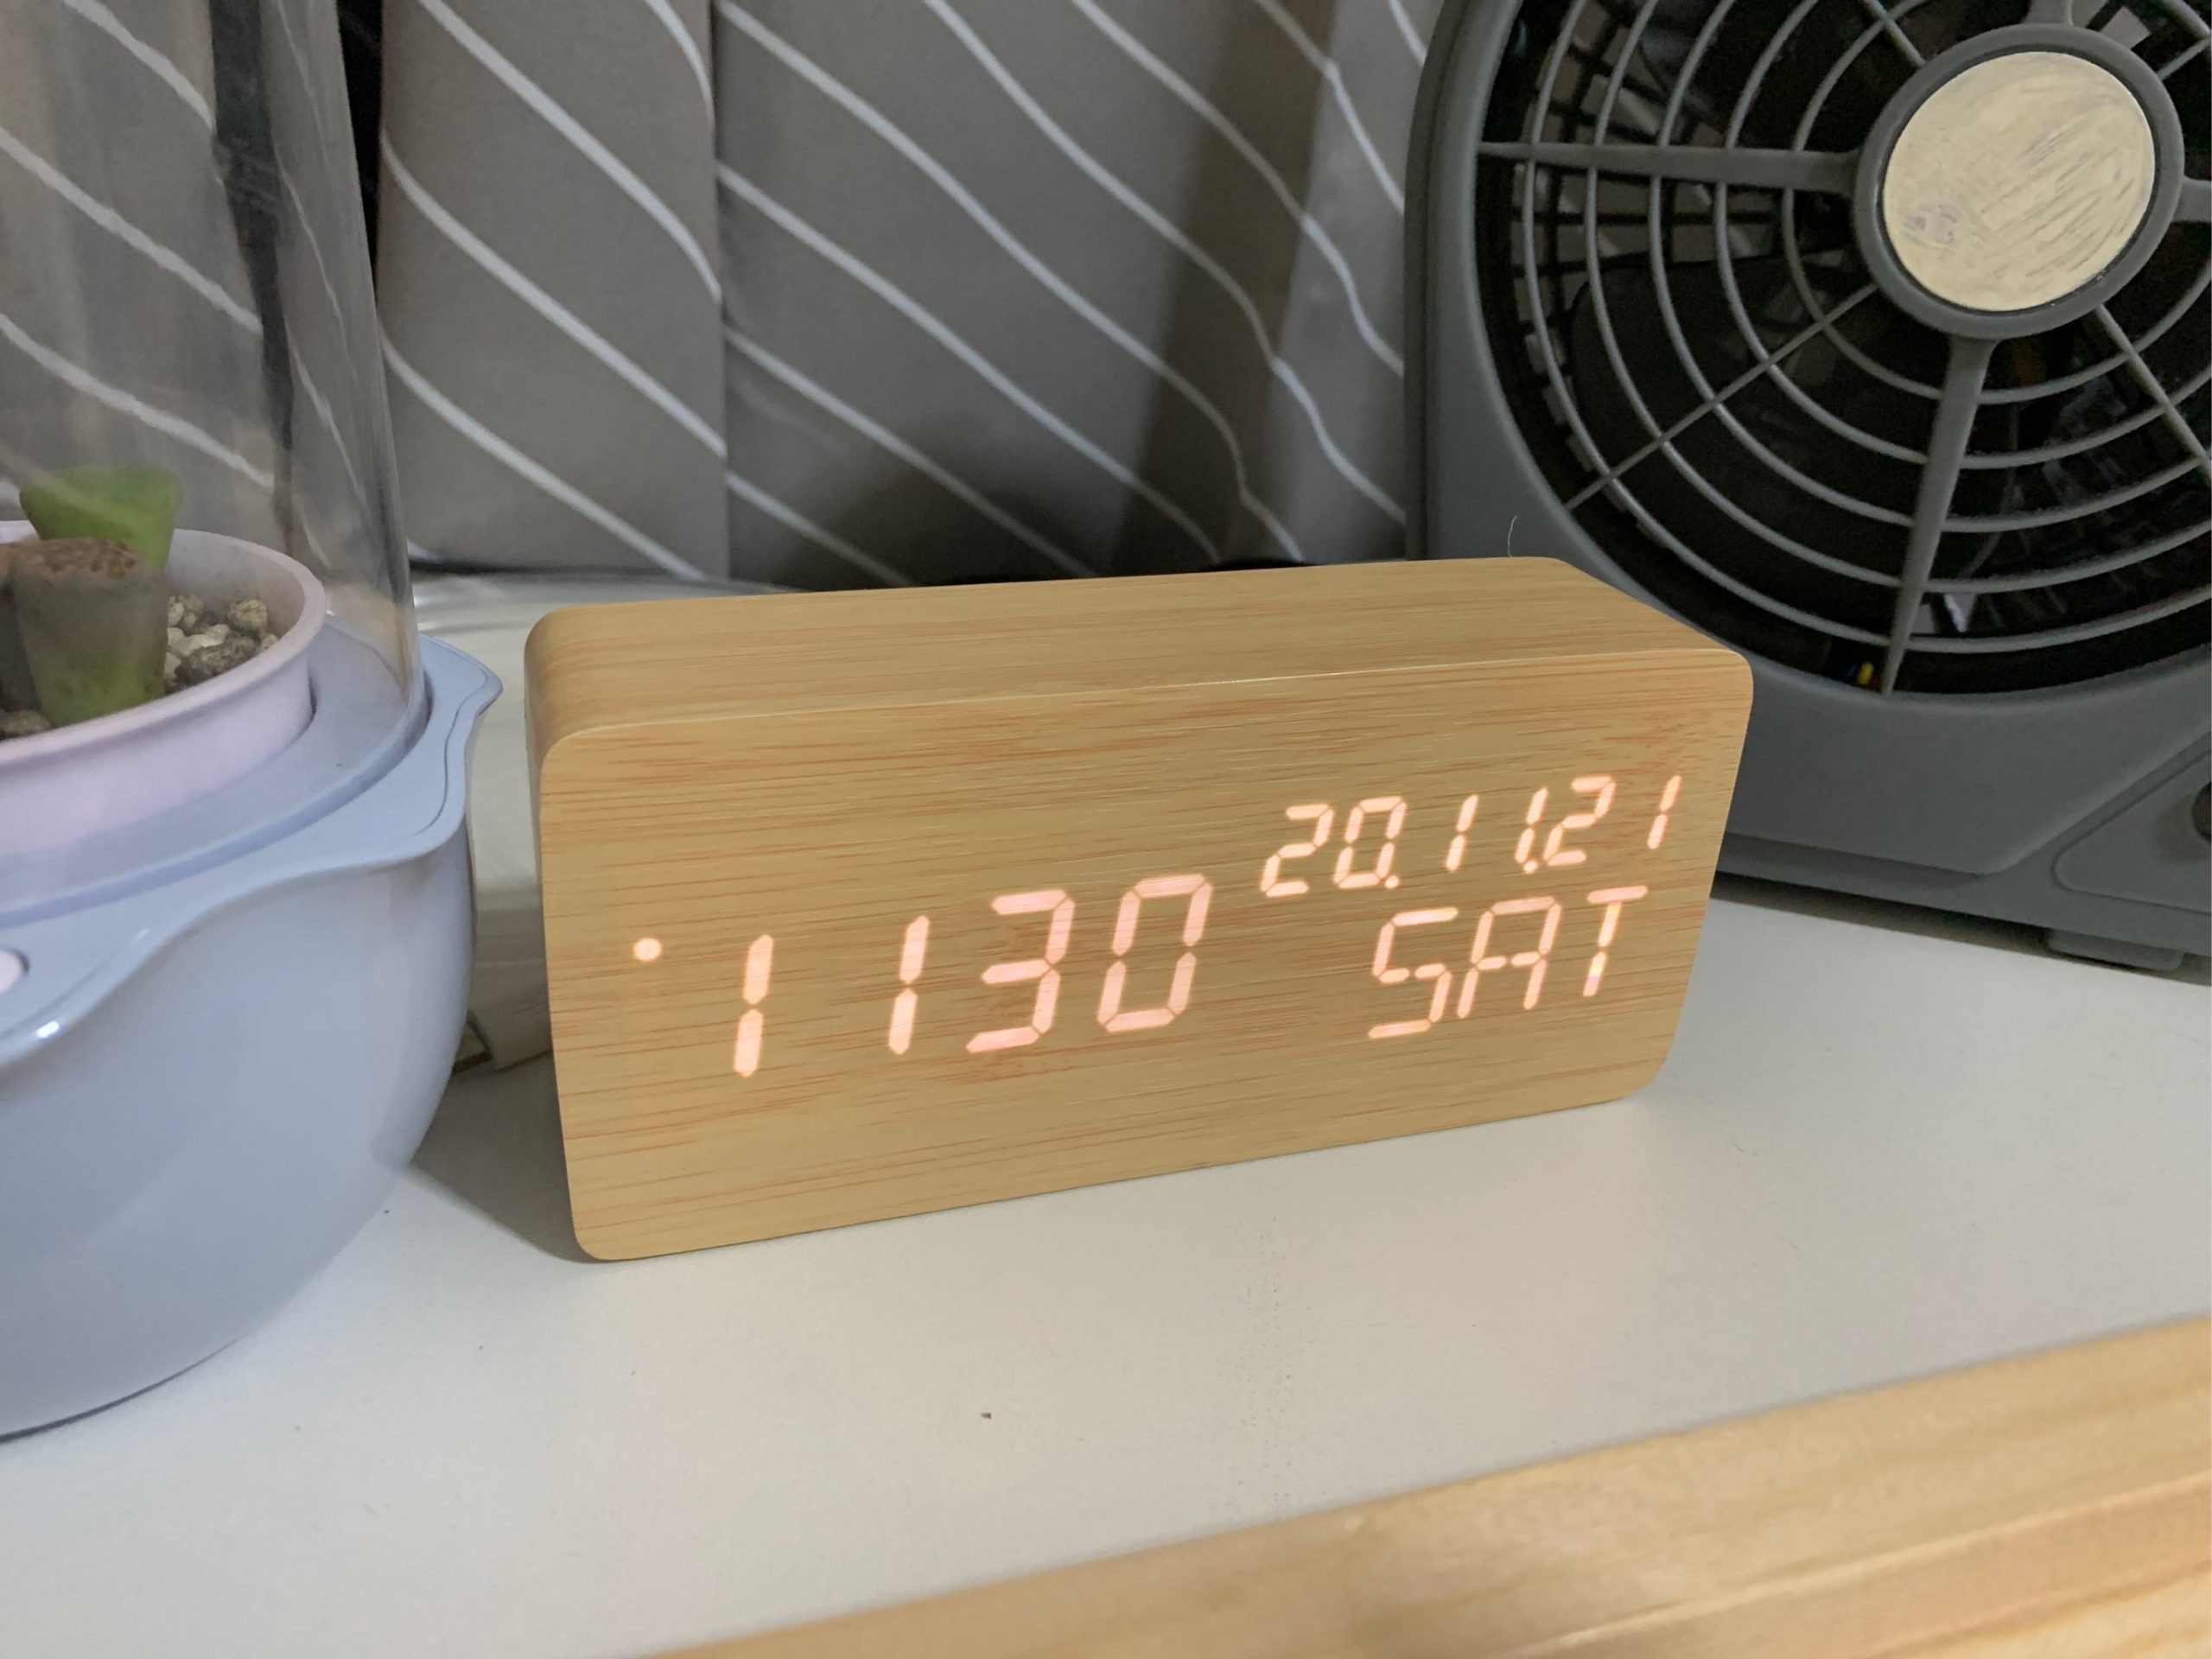 Melanie S FancyDream Wooden LED Alarm Clock scaled